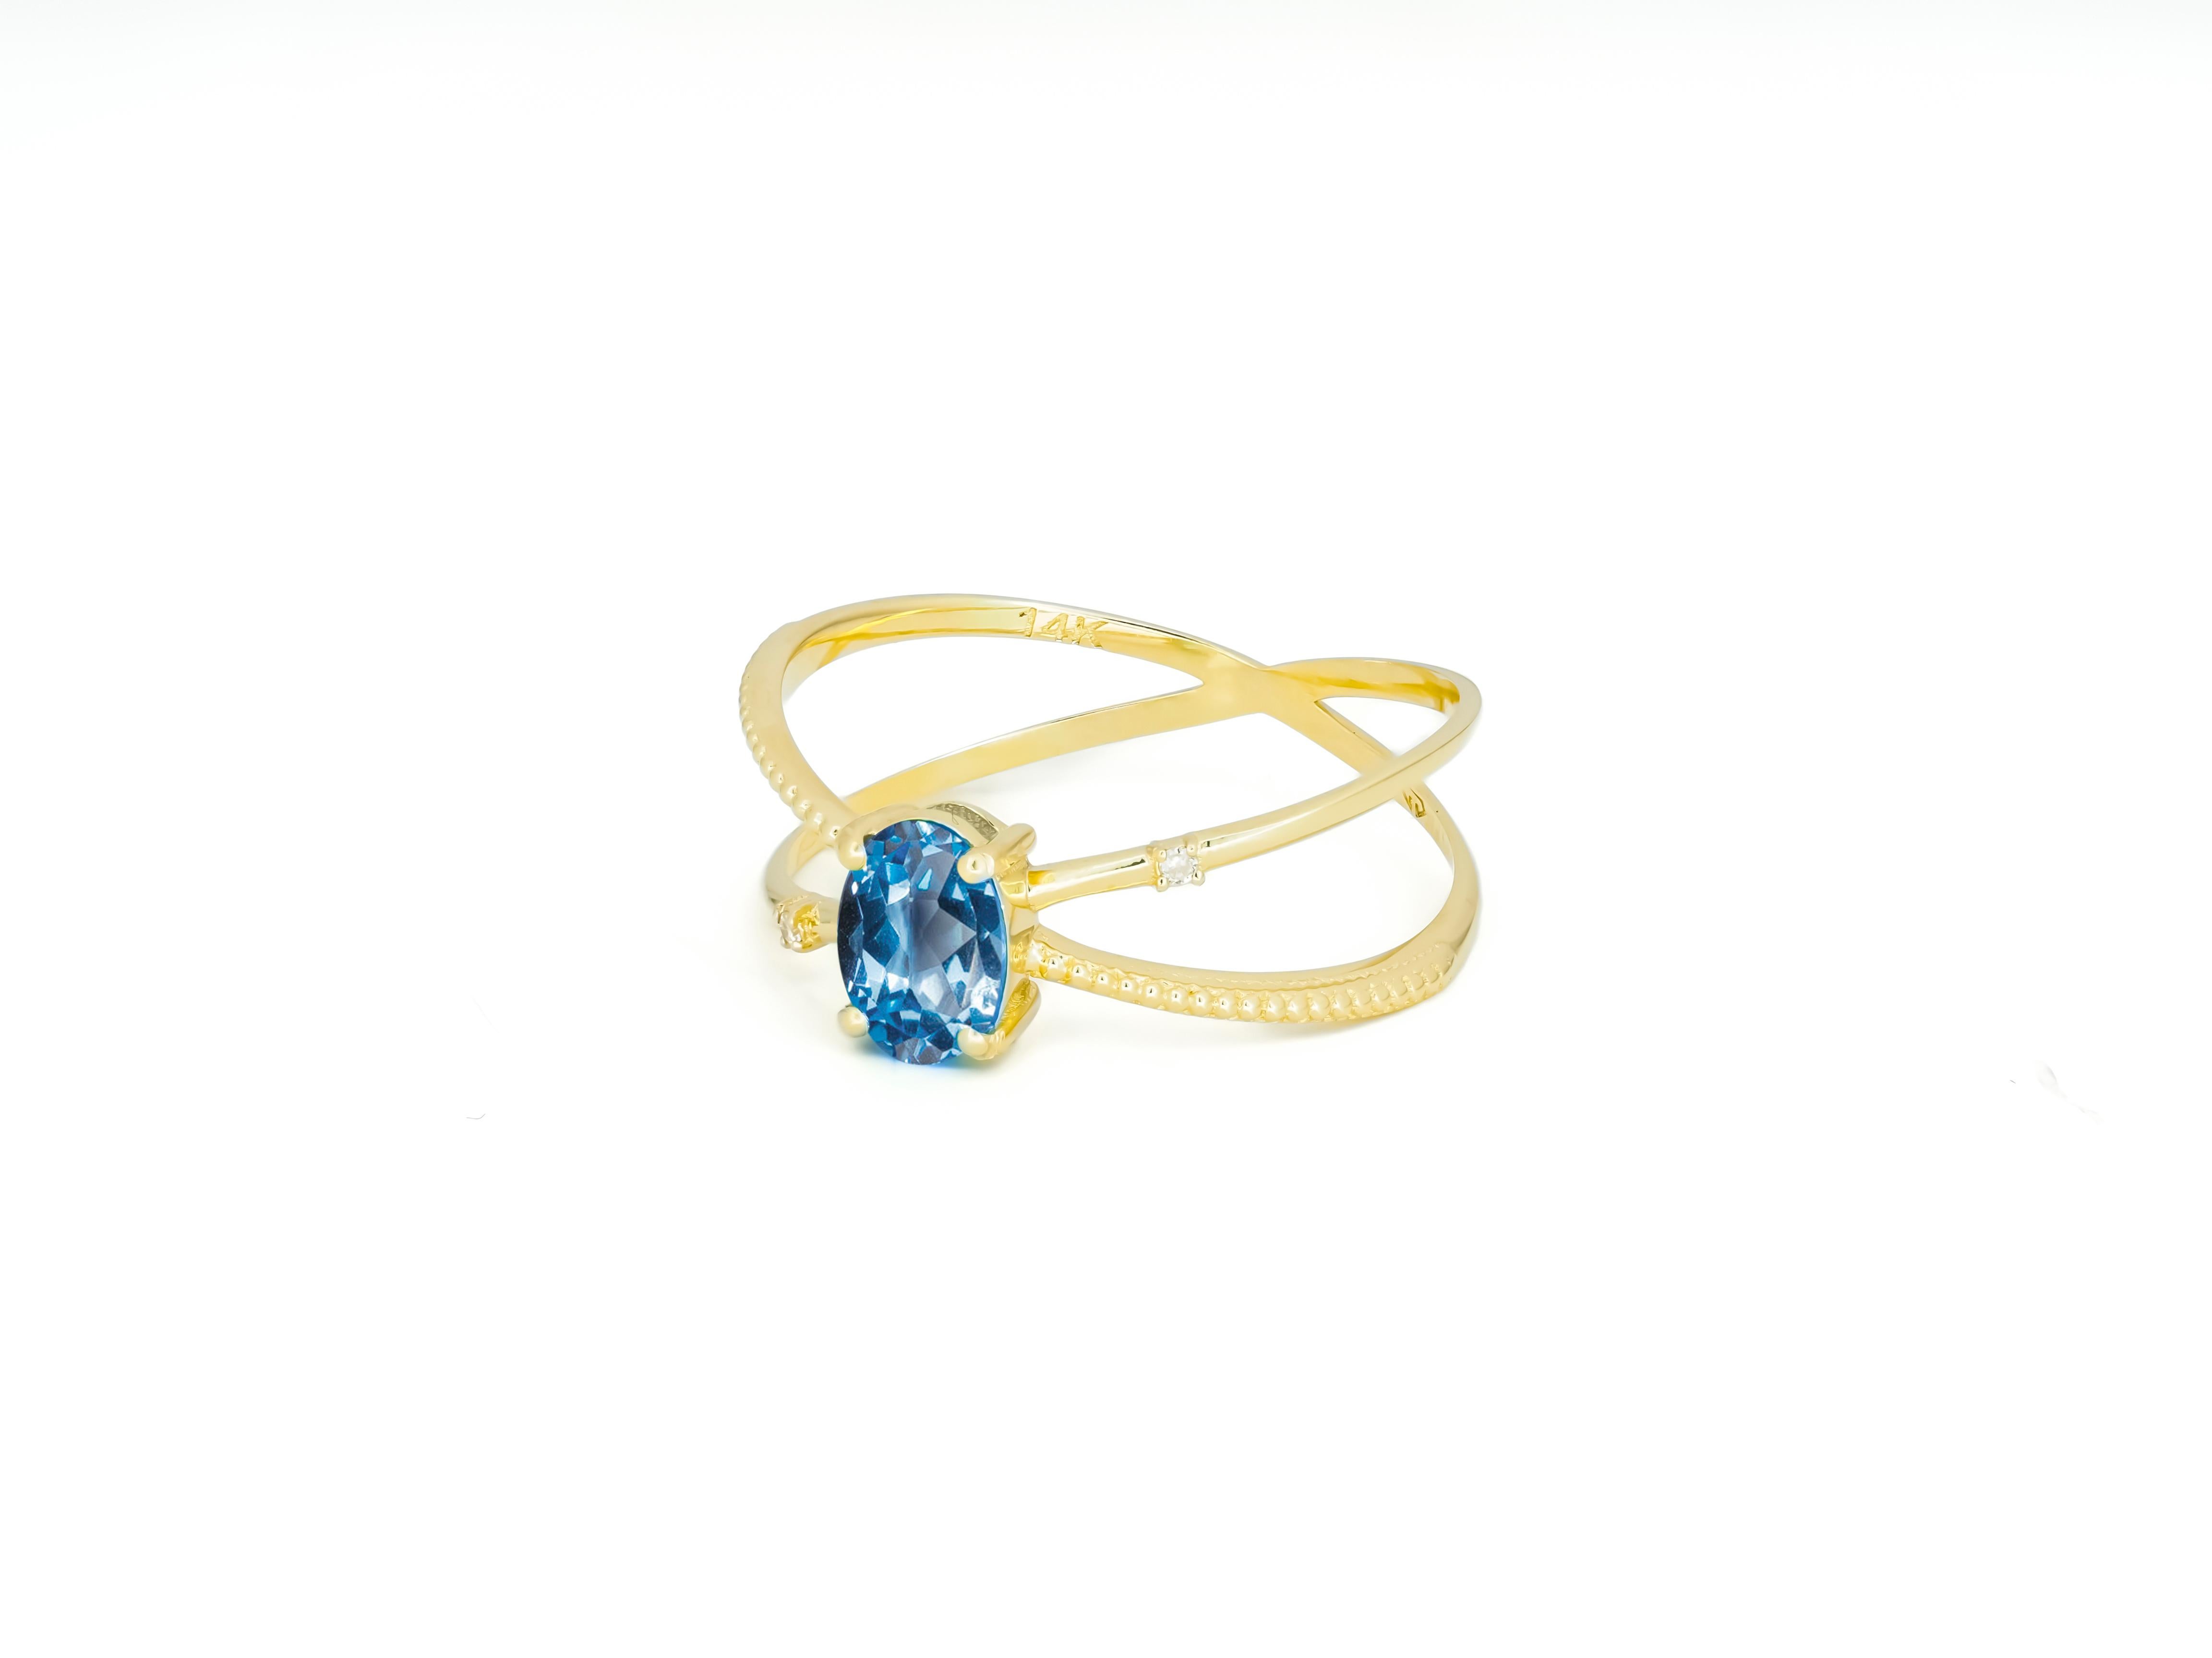 For Sale:  Topaz Spiral Ring, Oval Topaz Ring, Topaz Gold Ring, 14k Gold Ring with Topaz 4